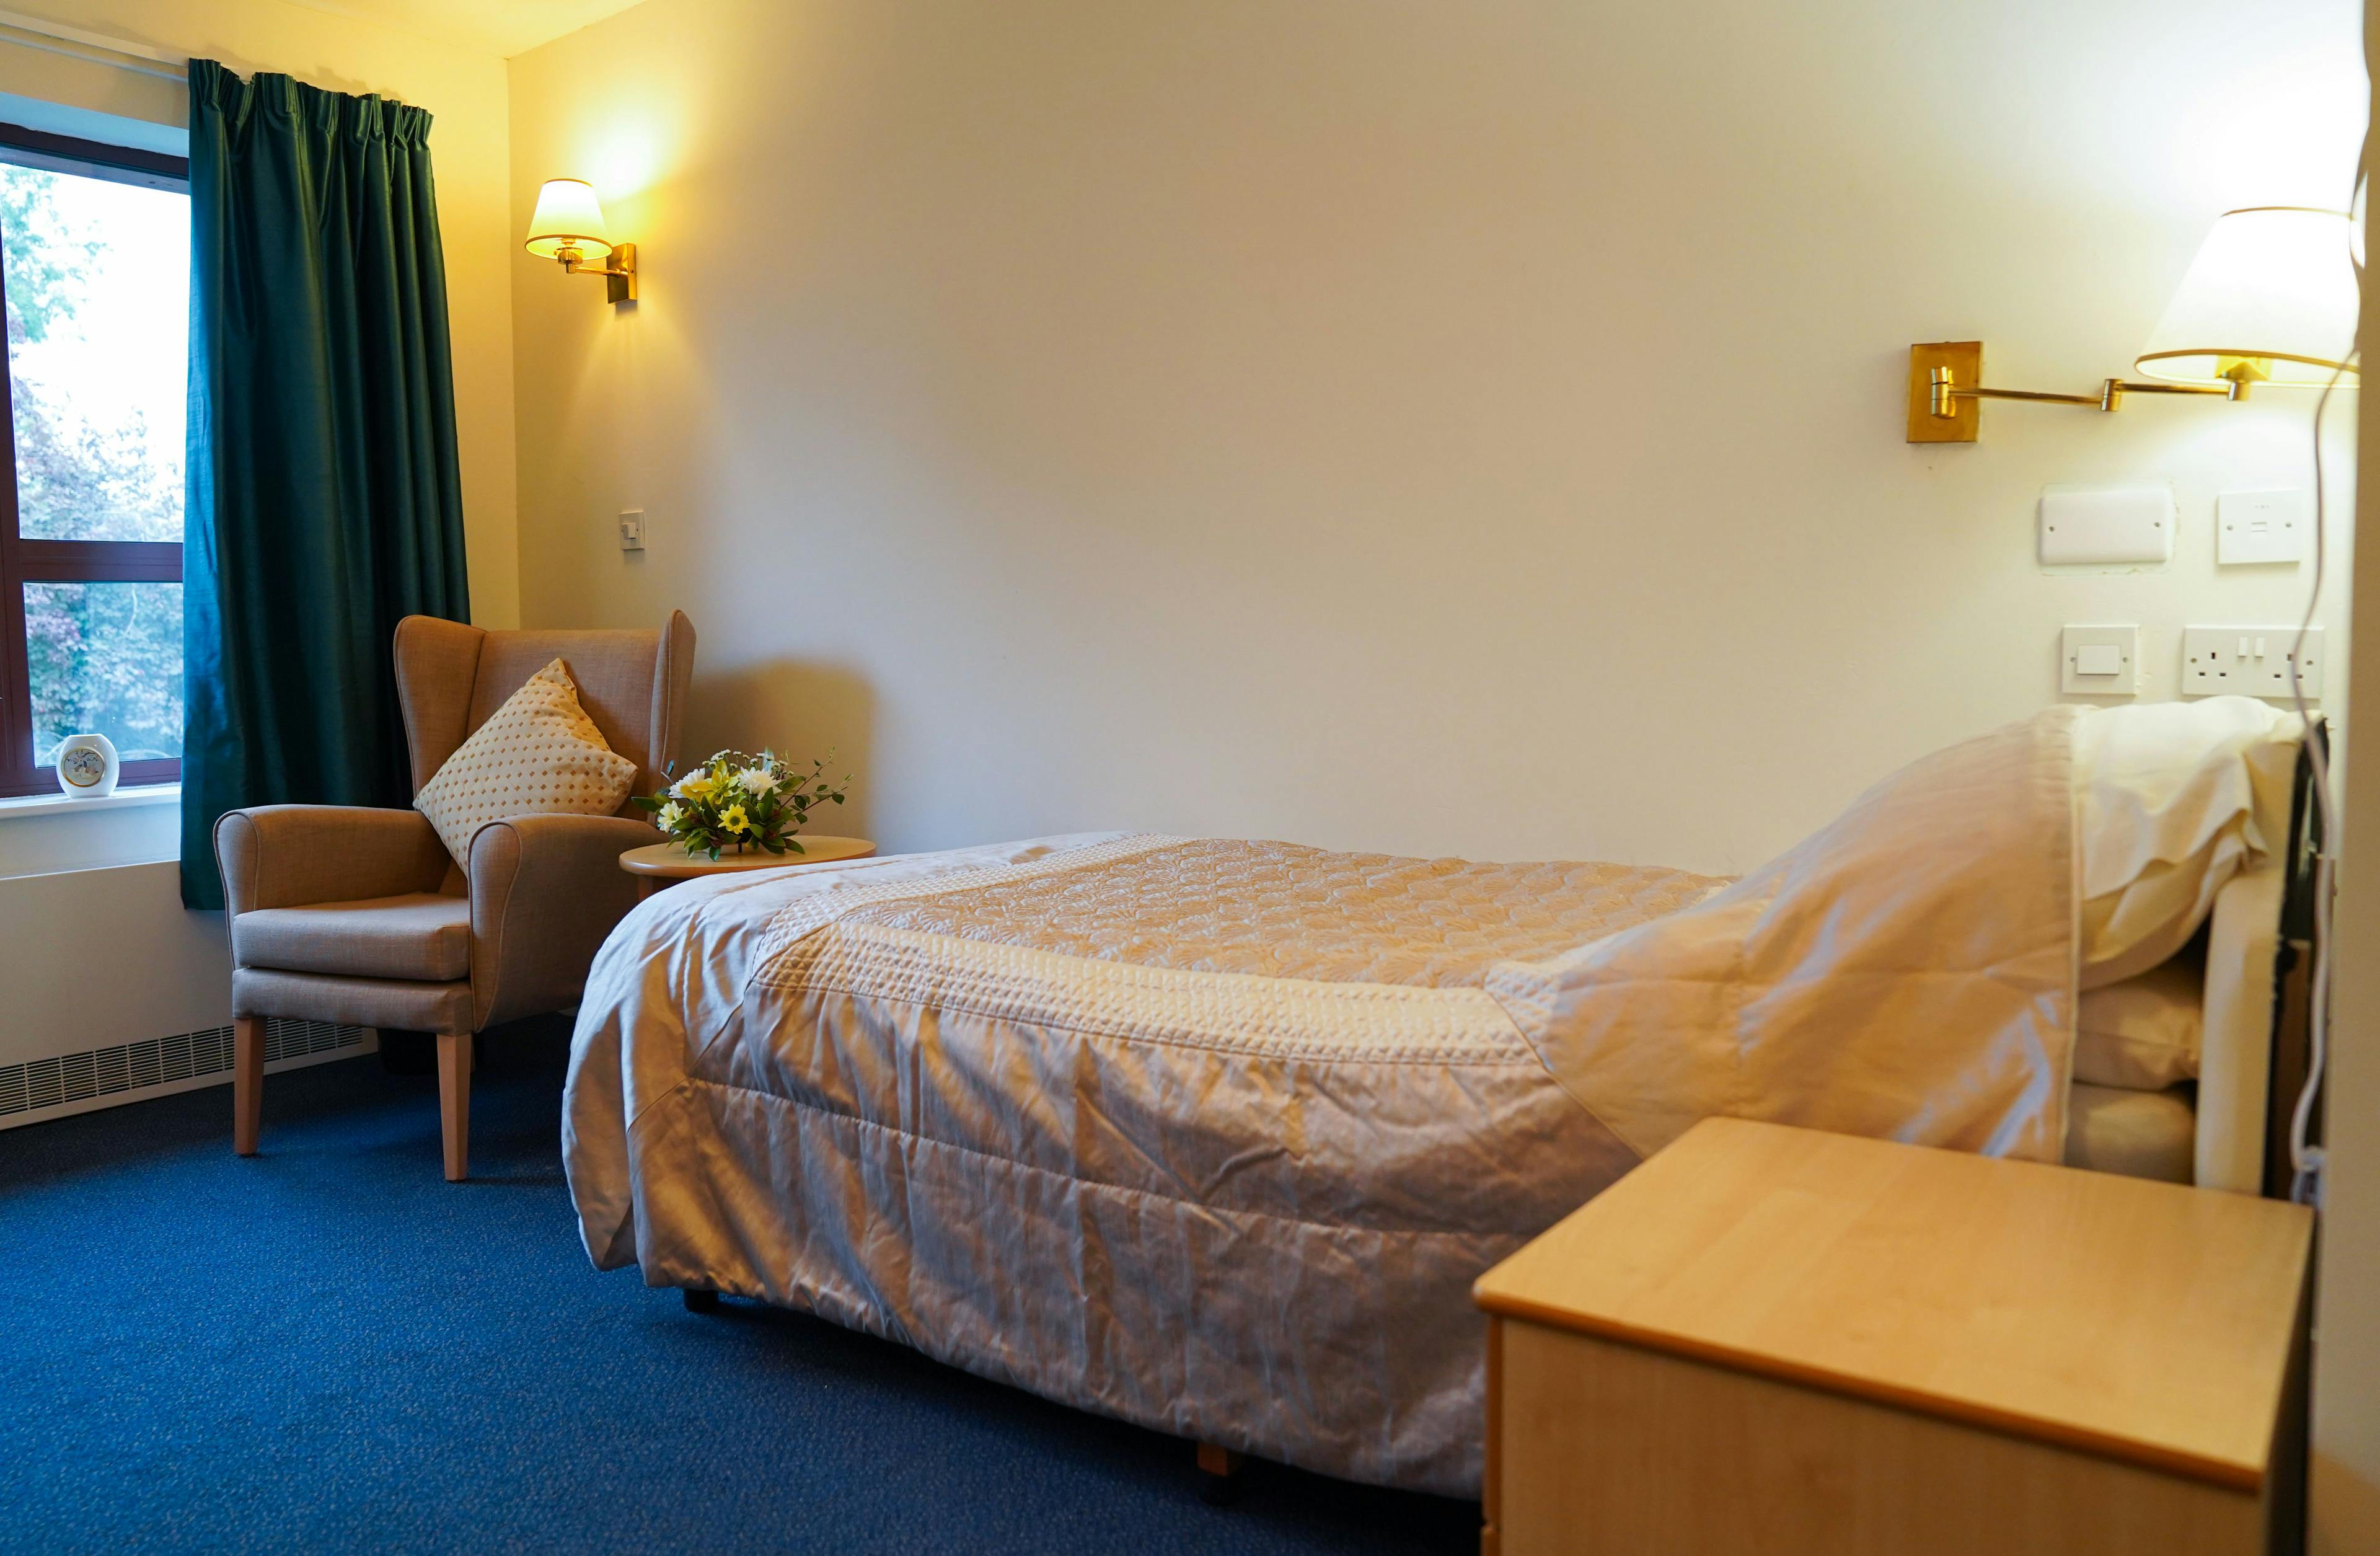 Bedroom of Hastings care home in Malvern, West Midlands